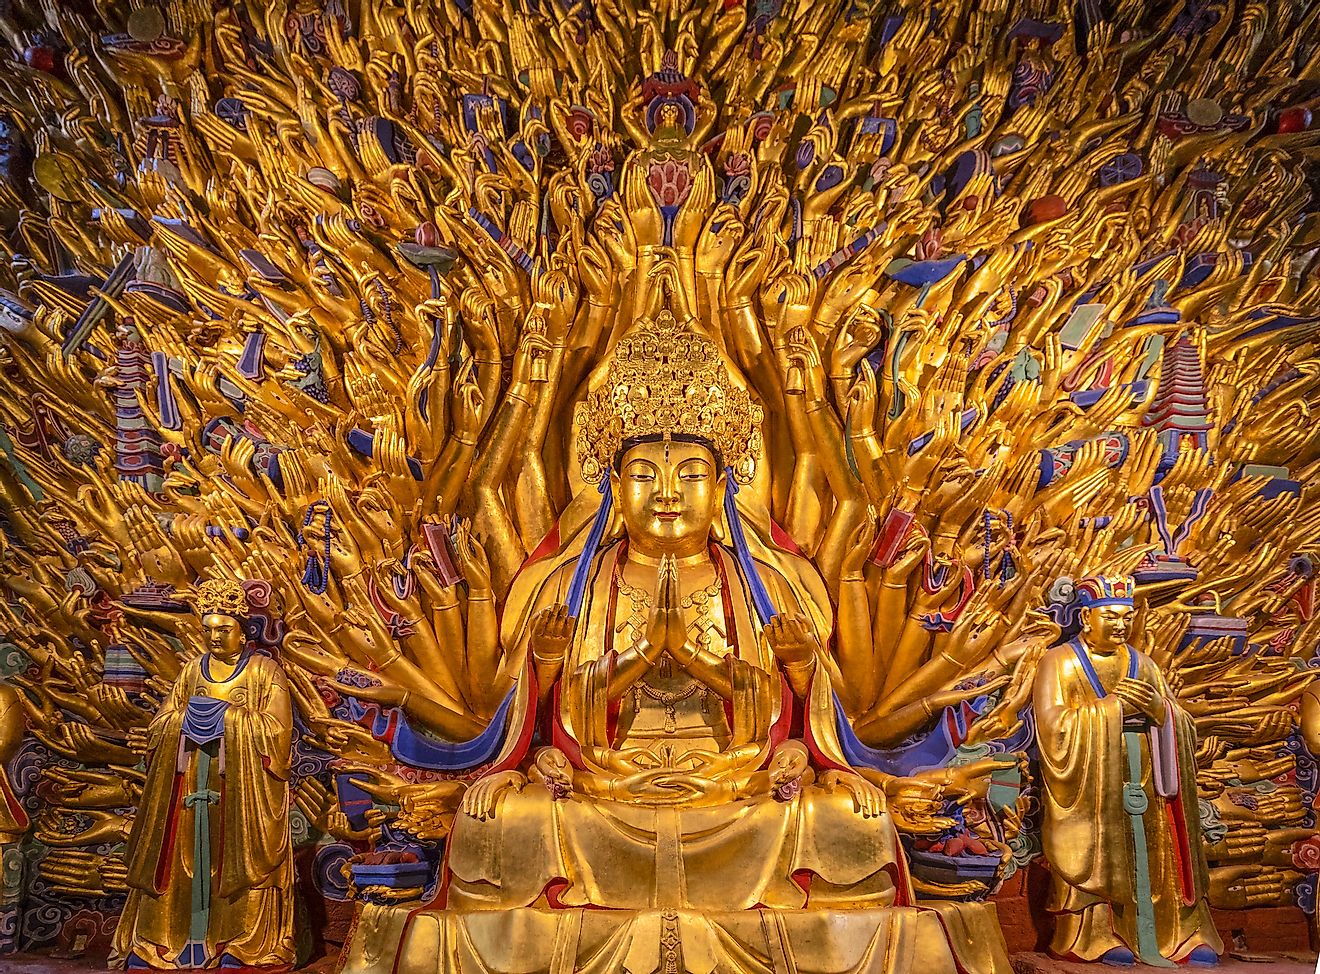 Golden sculpture of Avalokiteshvara Buddha or Guanyin with thousand hands at Dazu Rock Carvings at Mount Baoding or Baodingshan in Dazu, Chongqing, China. Image credit: NG-Spacetime/Shutterstock.com